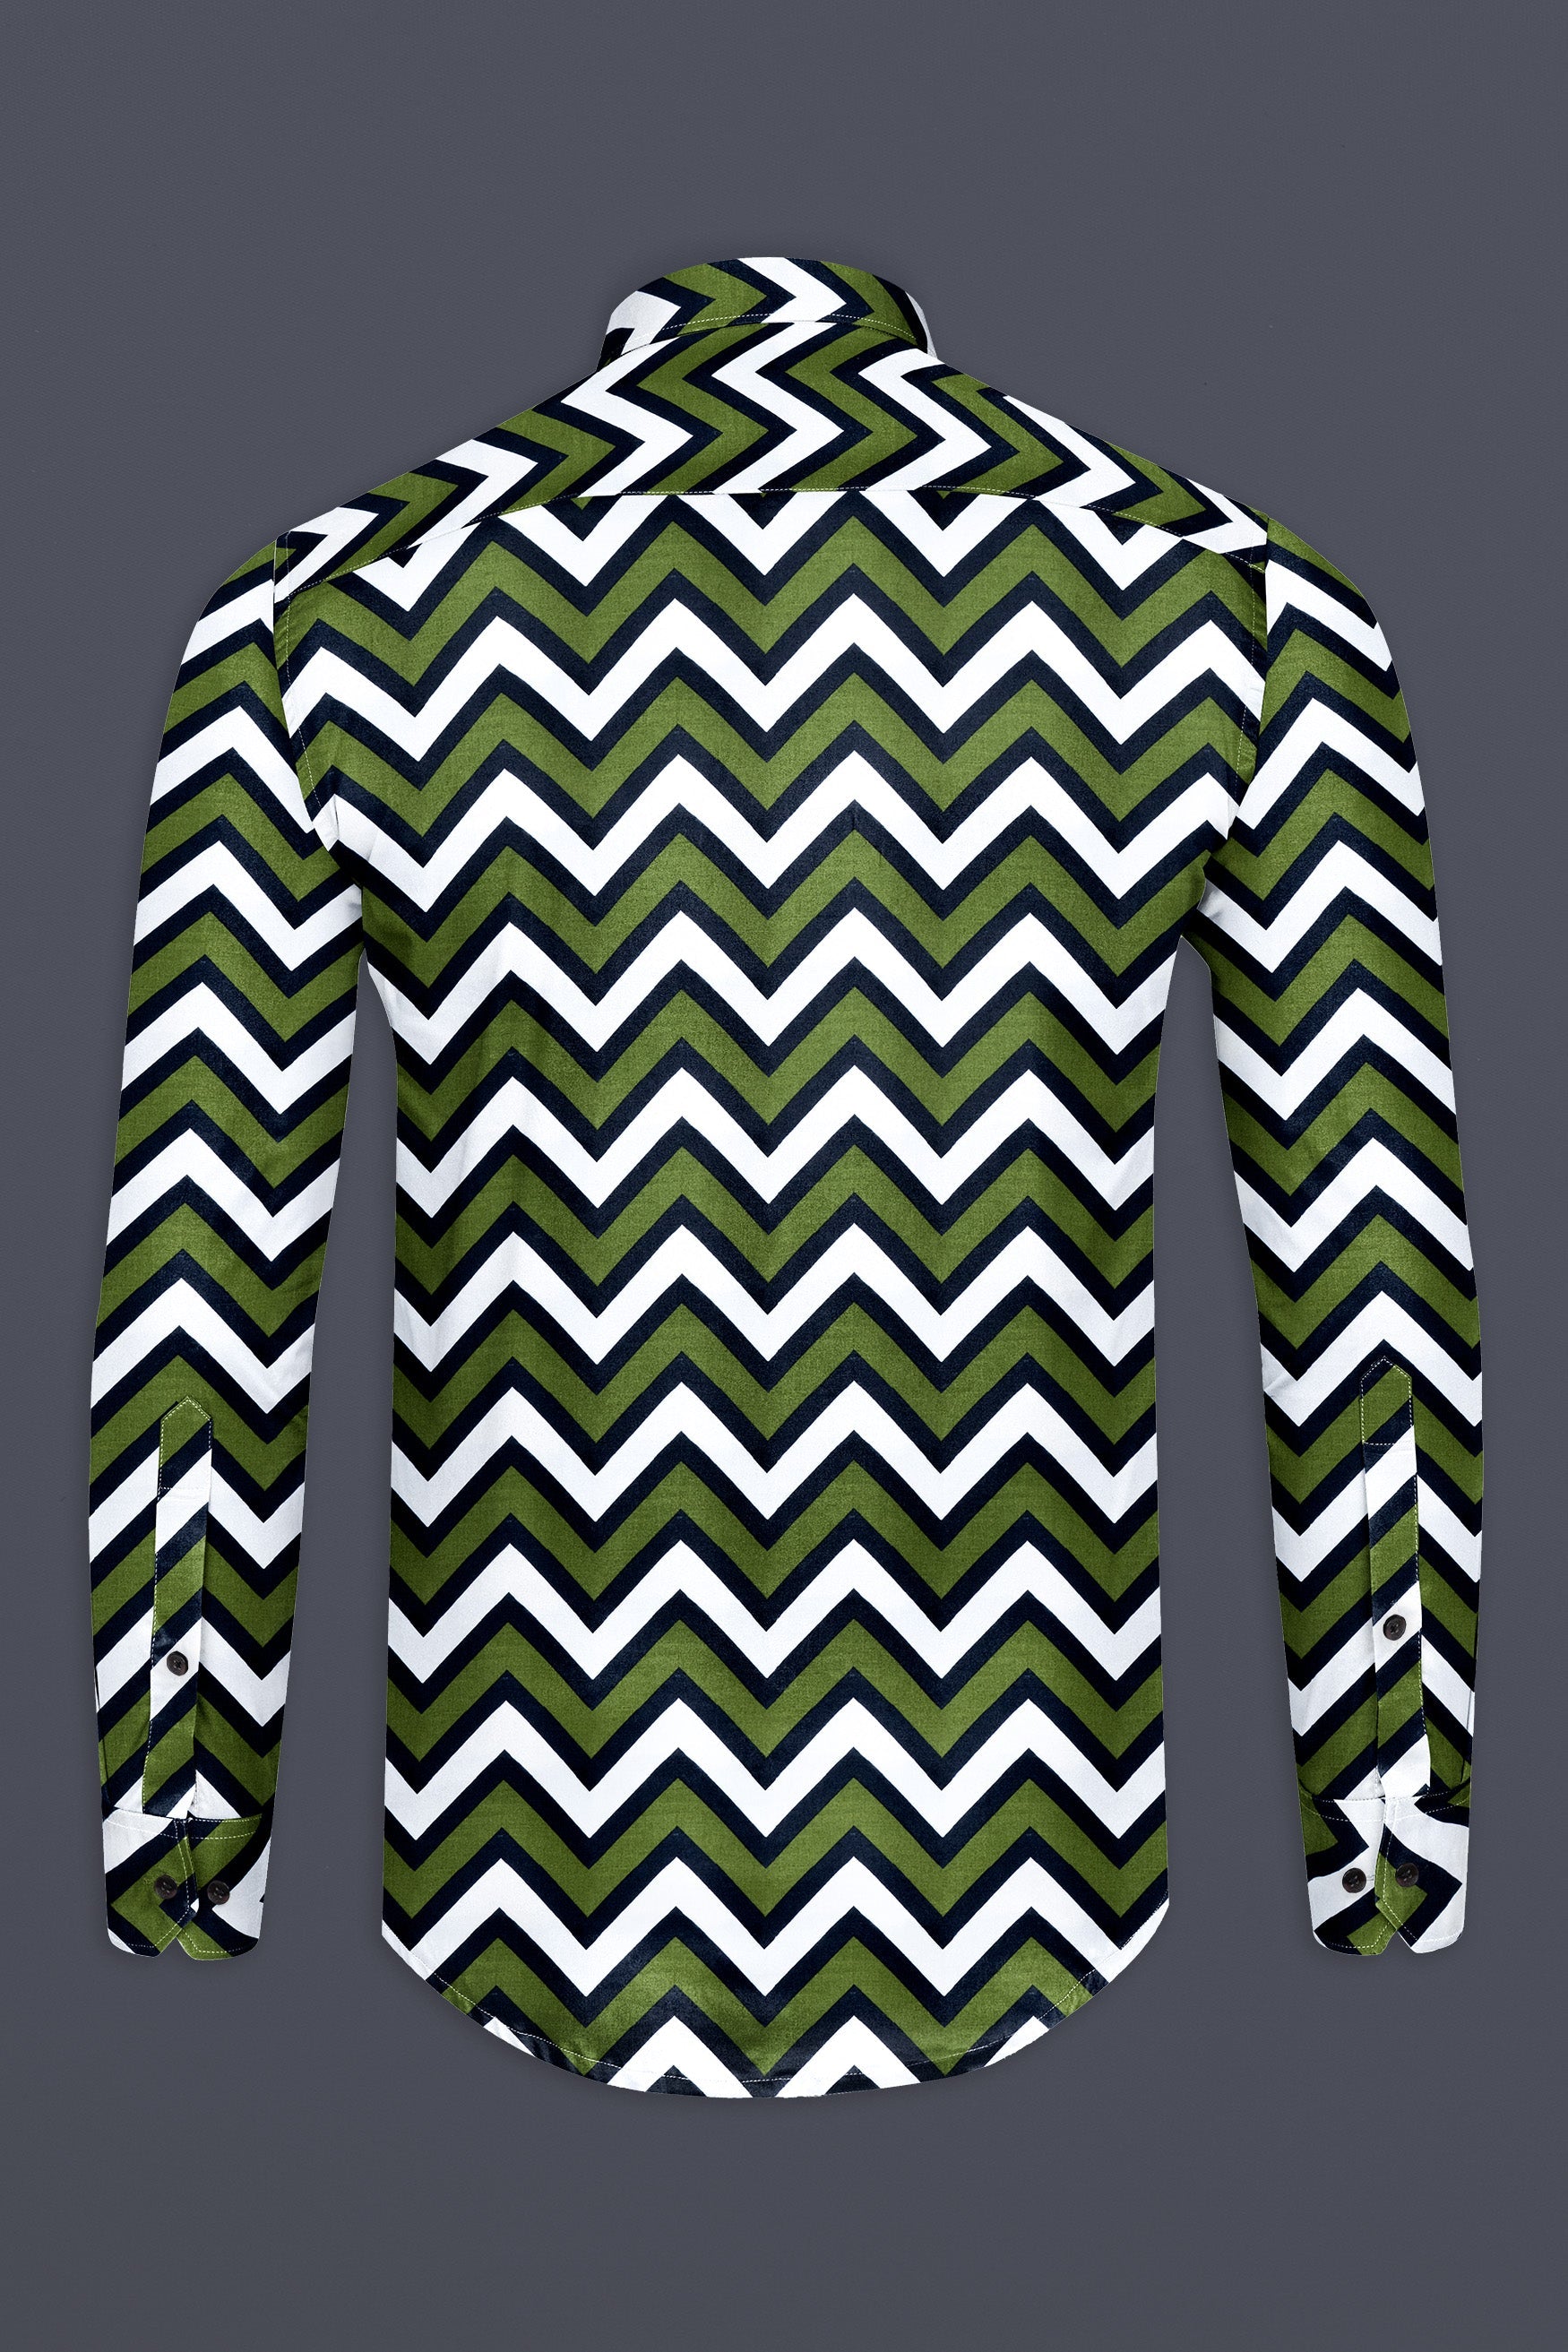 Finch Green And Cinder Black Chevron Prints Super Soft Premium Cotton Designer Shirt